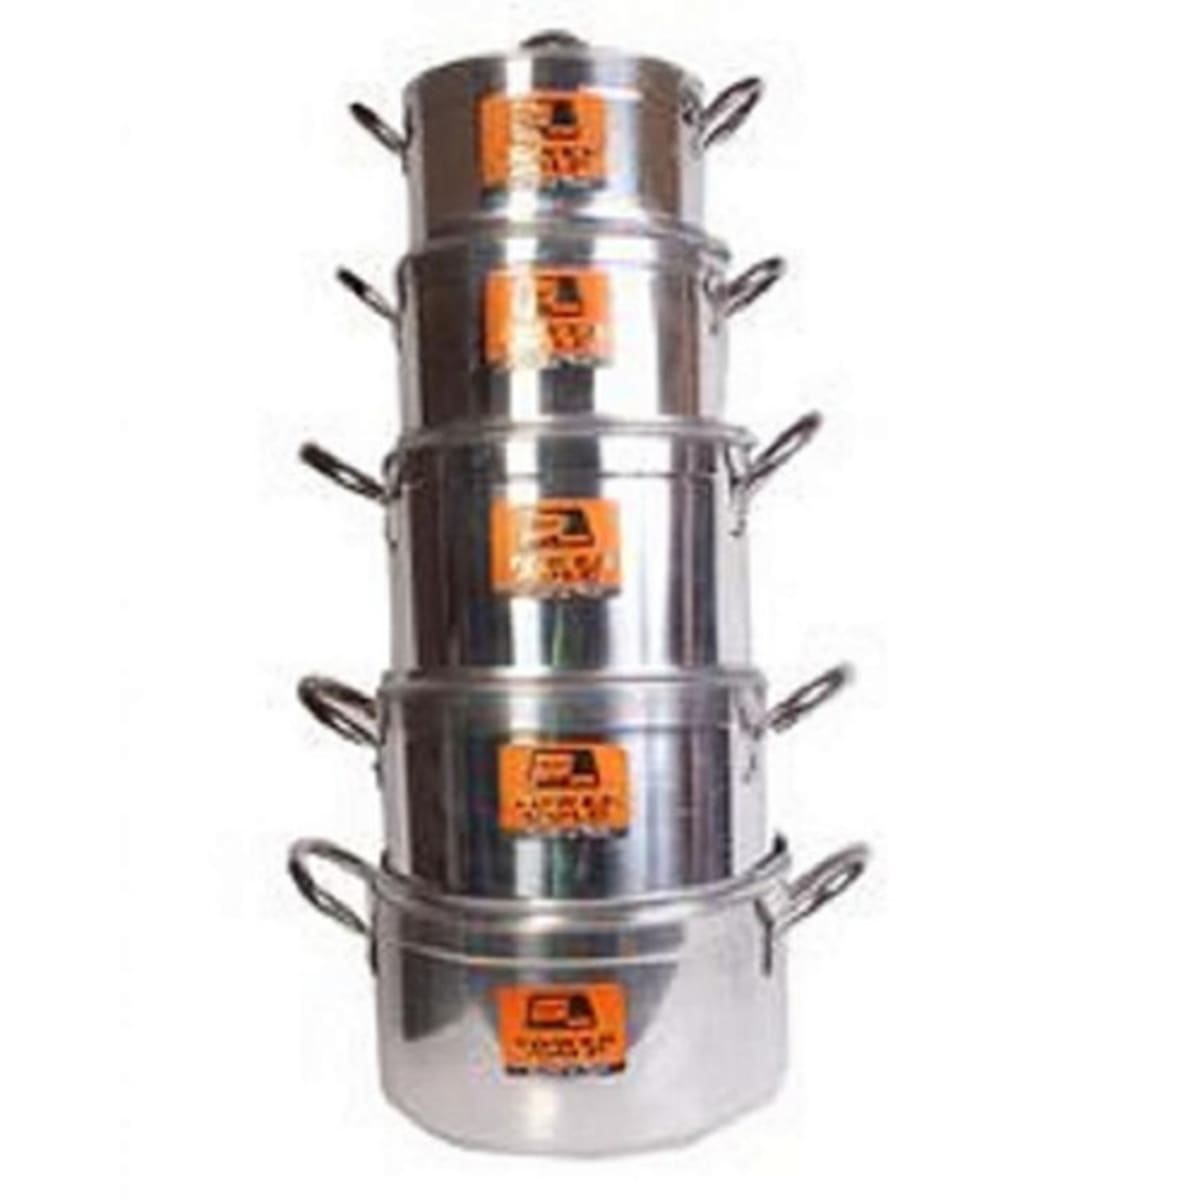 Tower Set of 5 Aluminium Pots